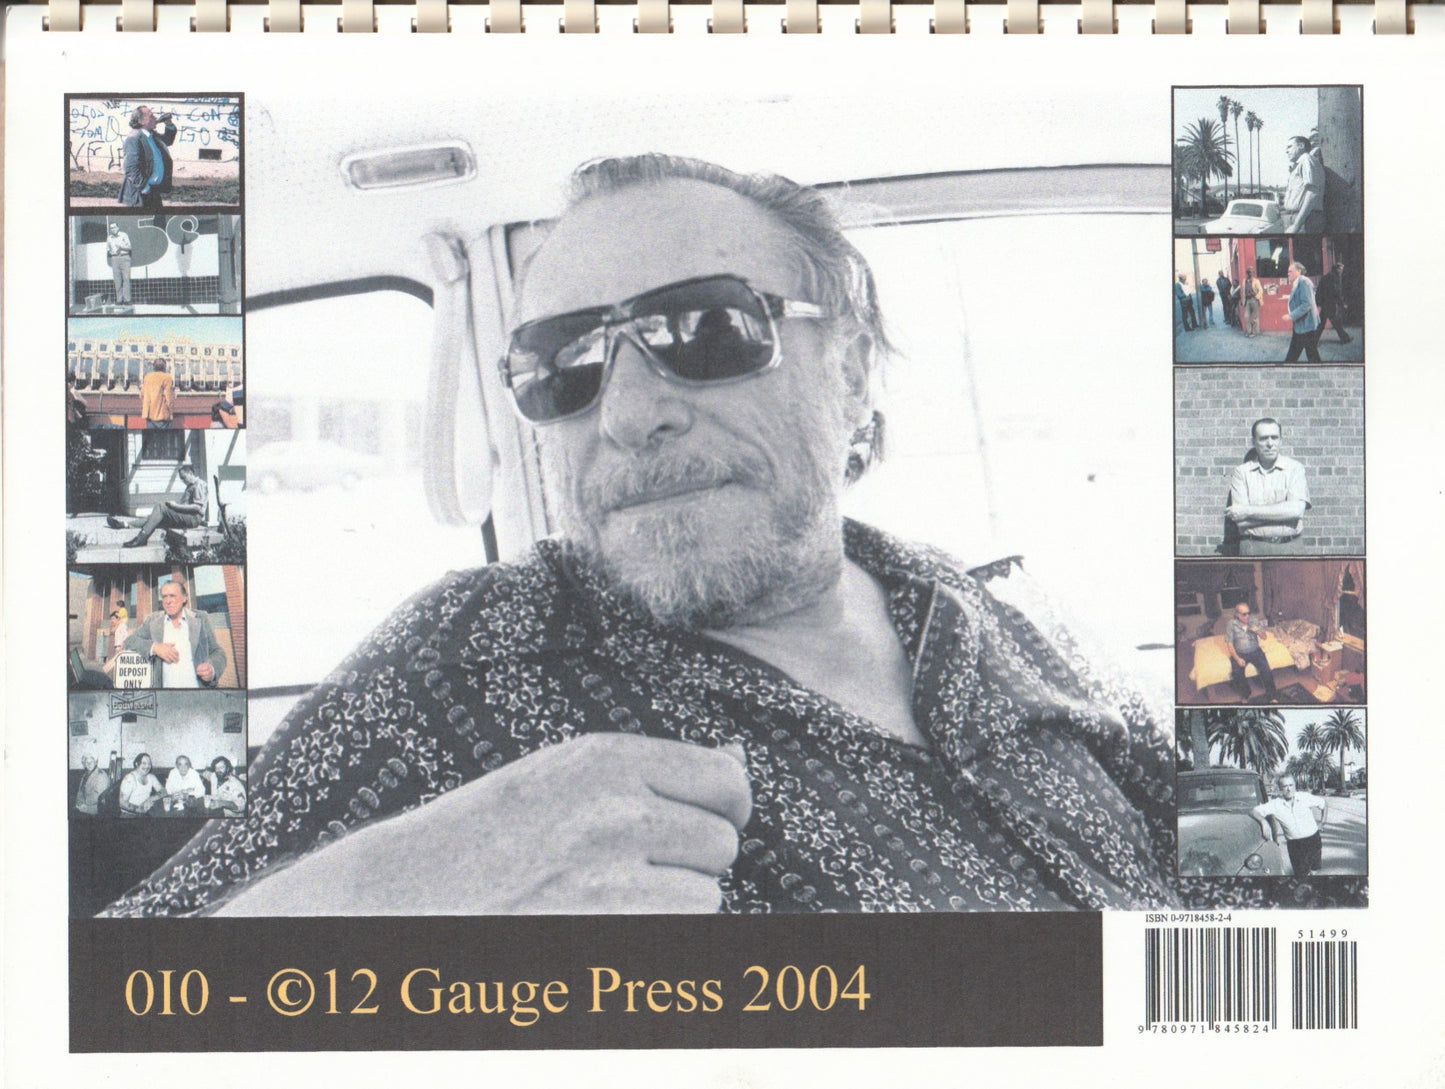 Charles Bukowski 2005 Calendar: Several B&W Vintage Photos